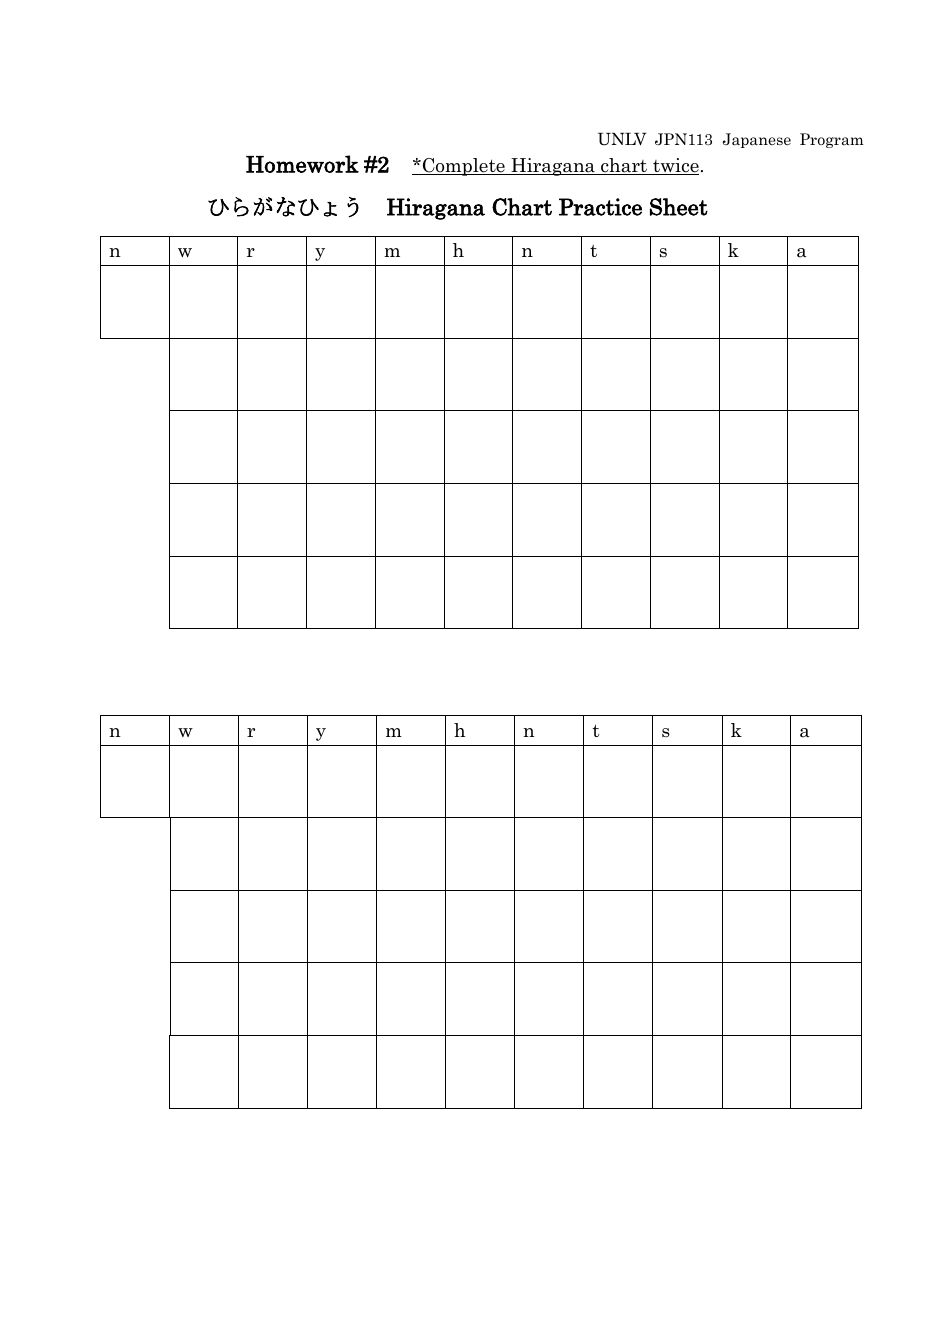 Hiragana Chart Practice Sheet - University of Nevada Download Printable PDF...